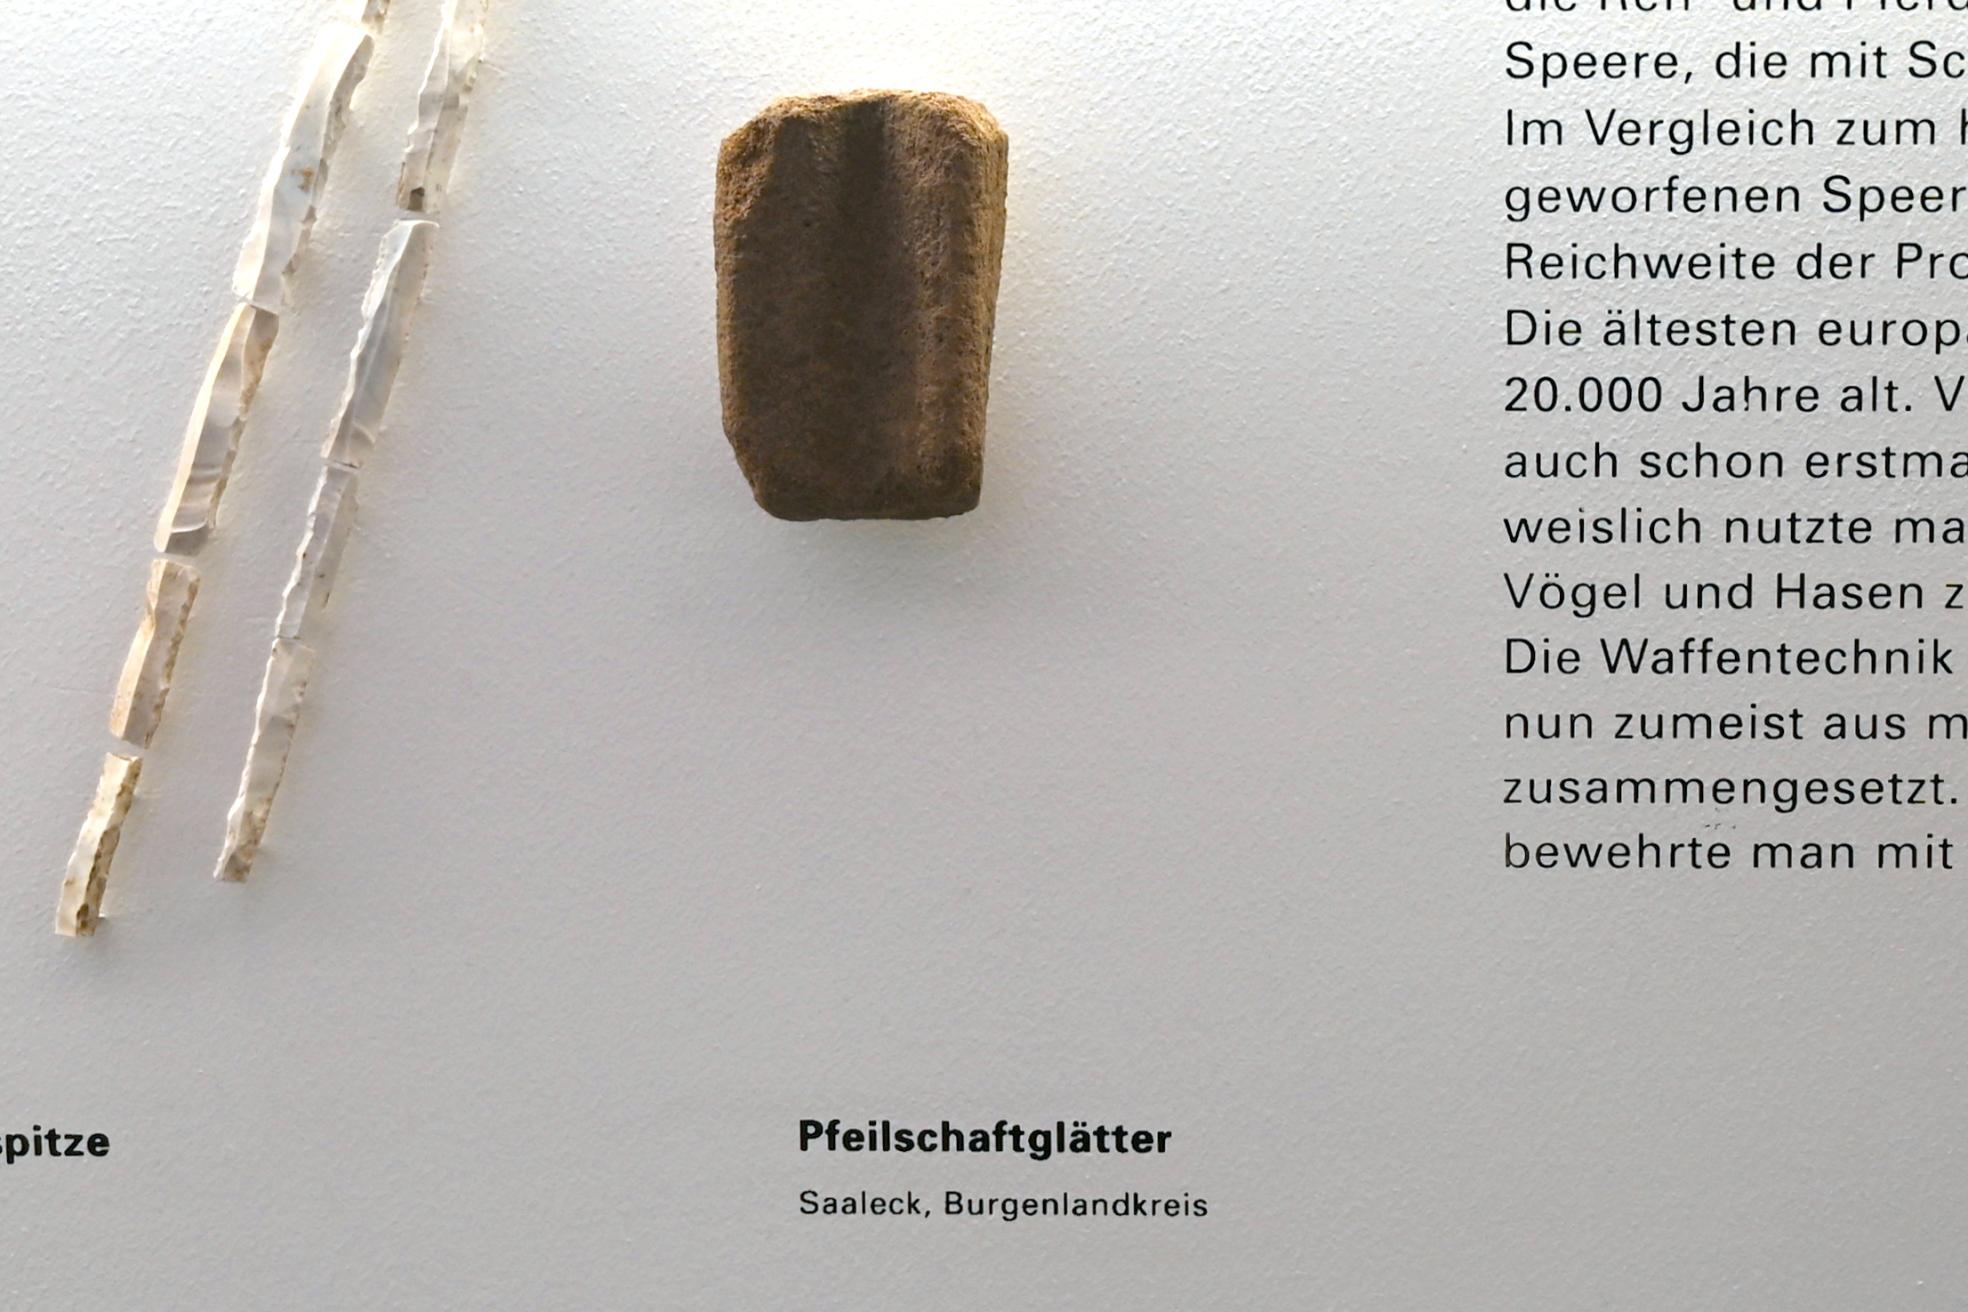 Pfeilschaftglätter, Magdalénien, 13000 - 10000 v. Chr.